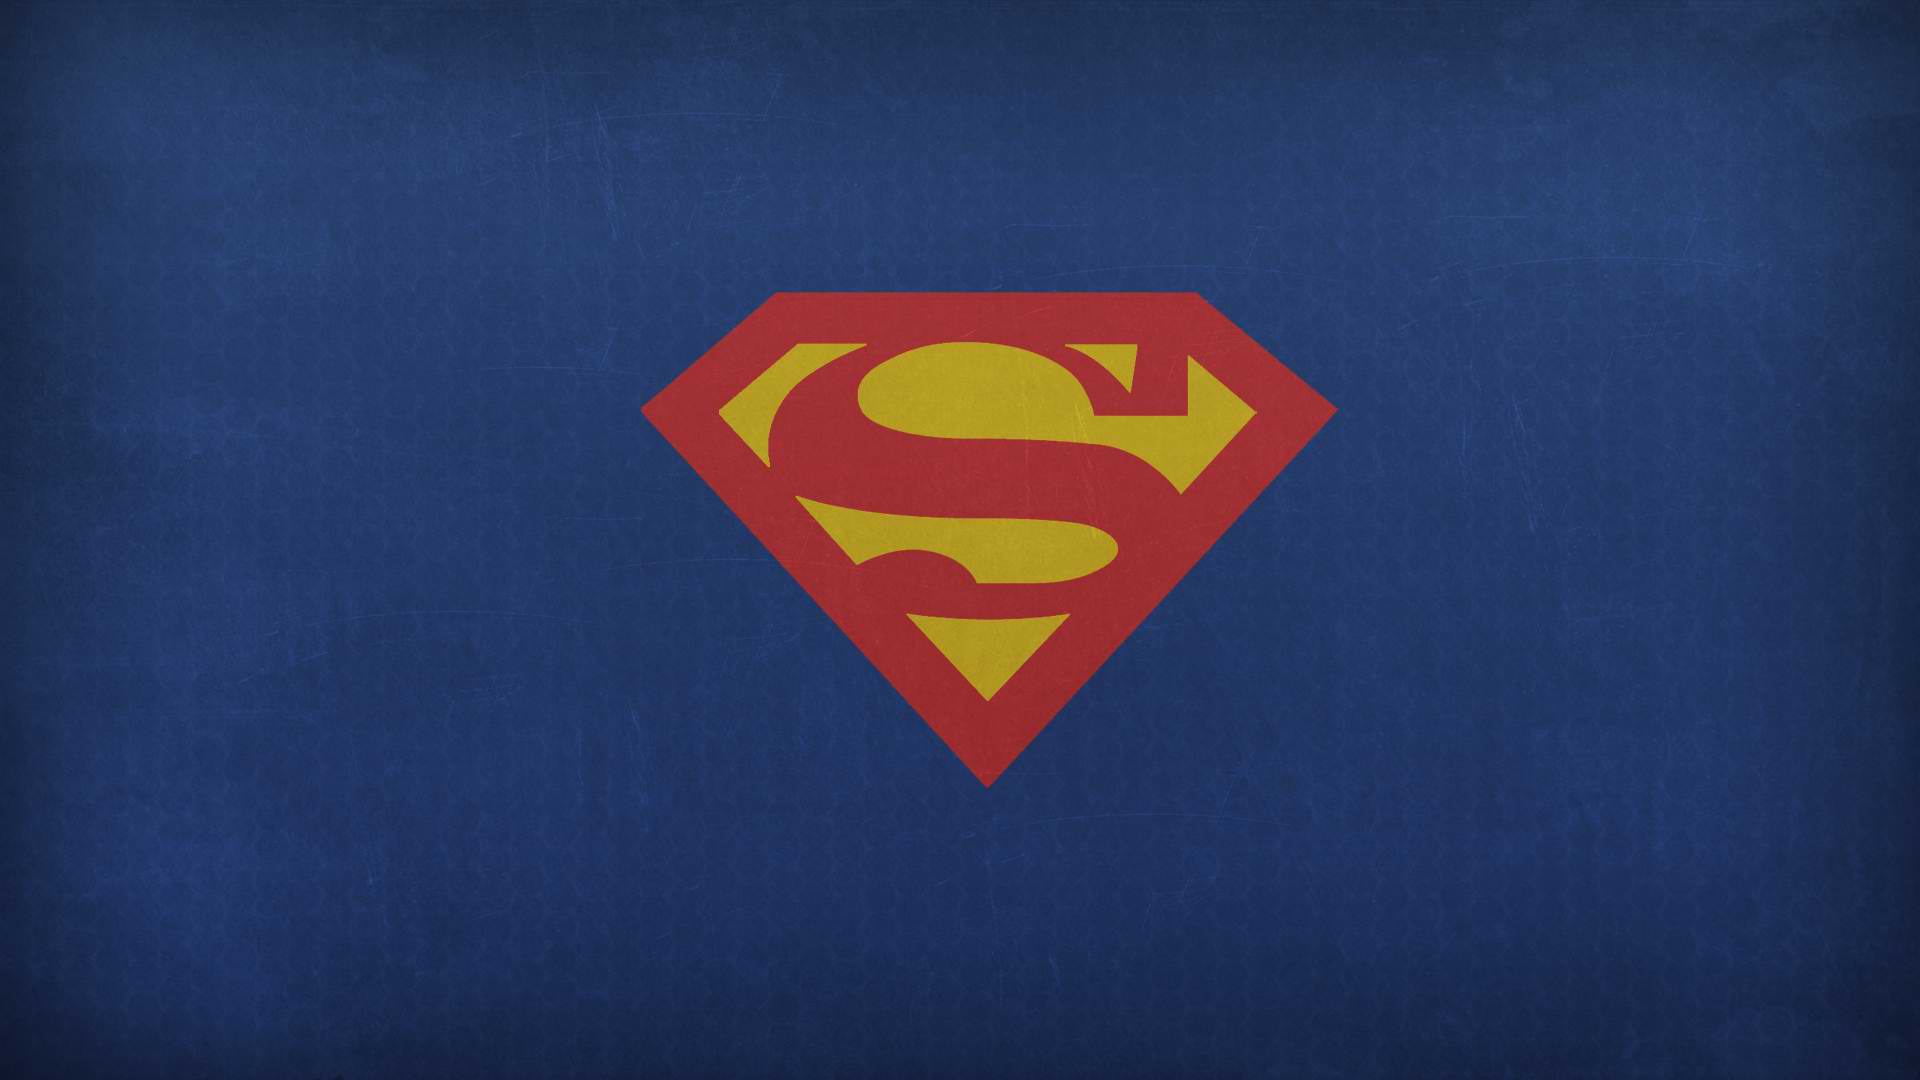 Wallpaper.wiki Superman Logo IPad Background Download Free PIC